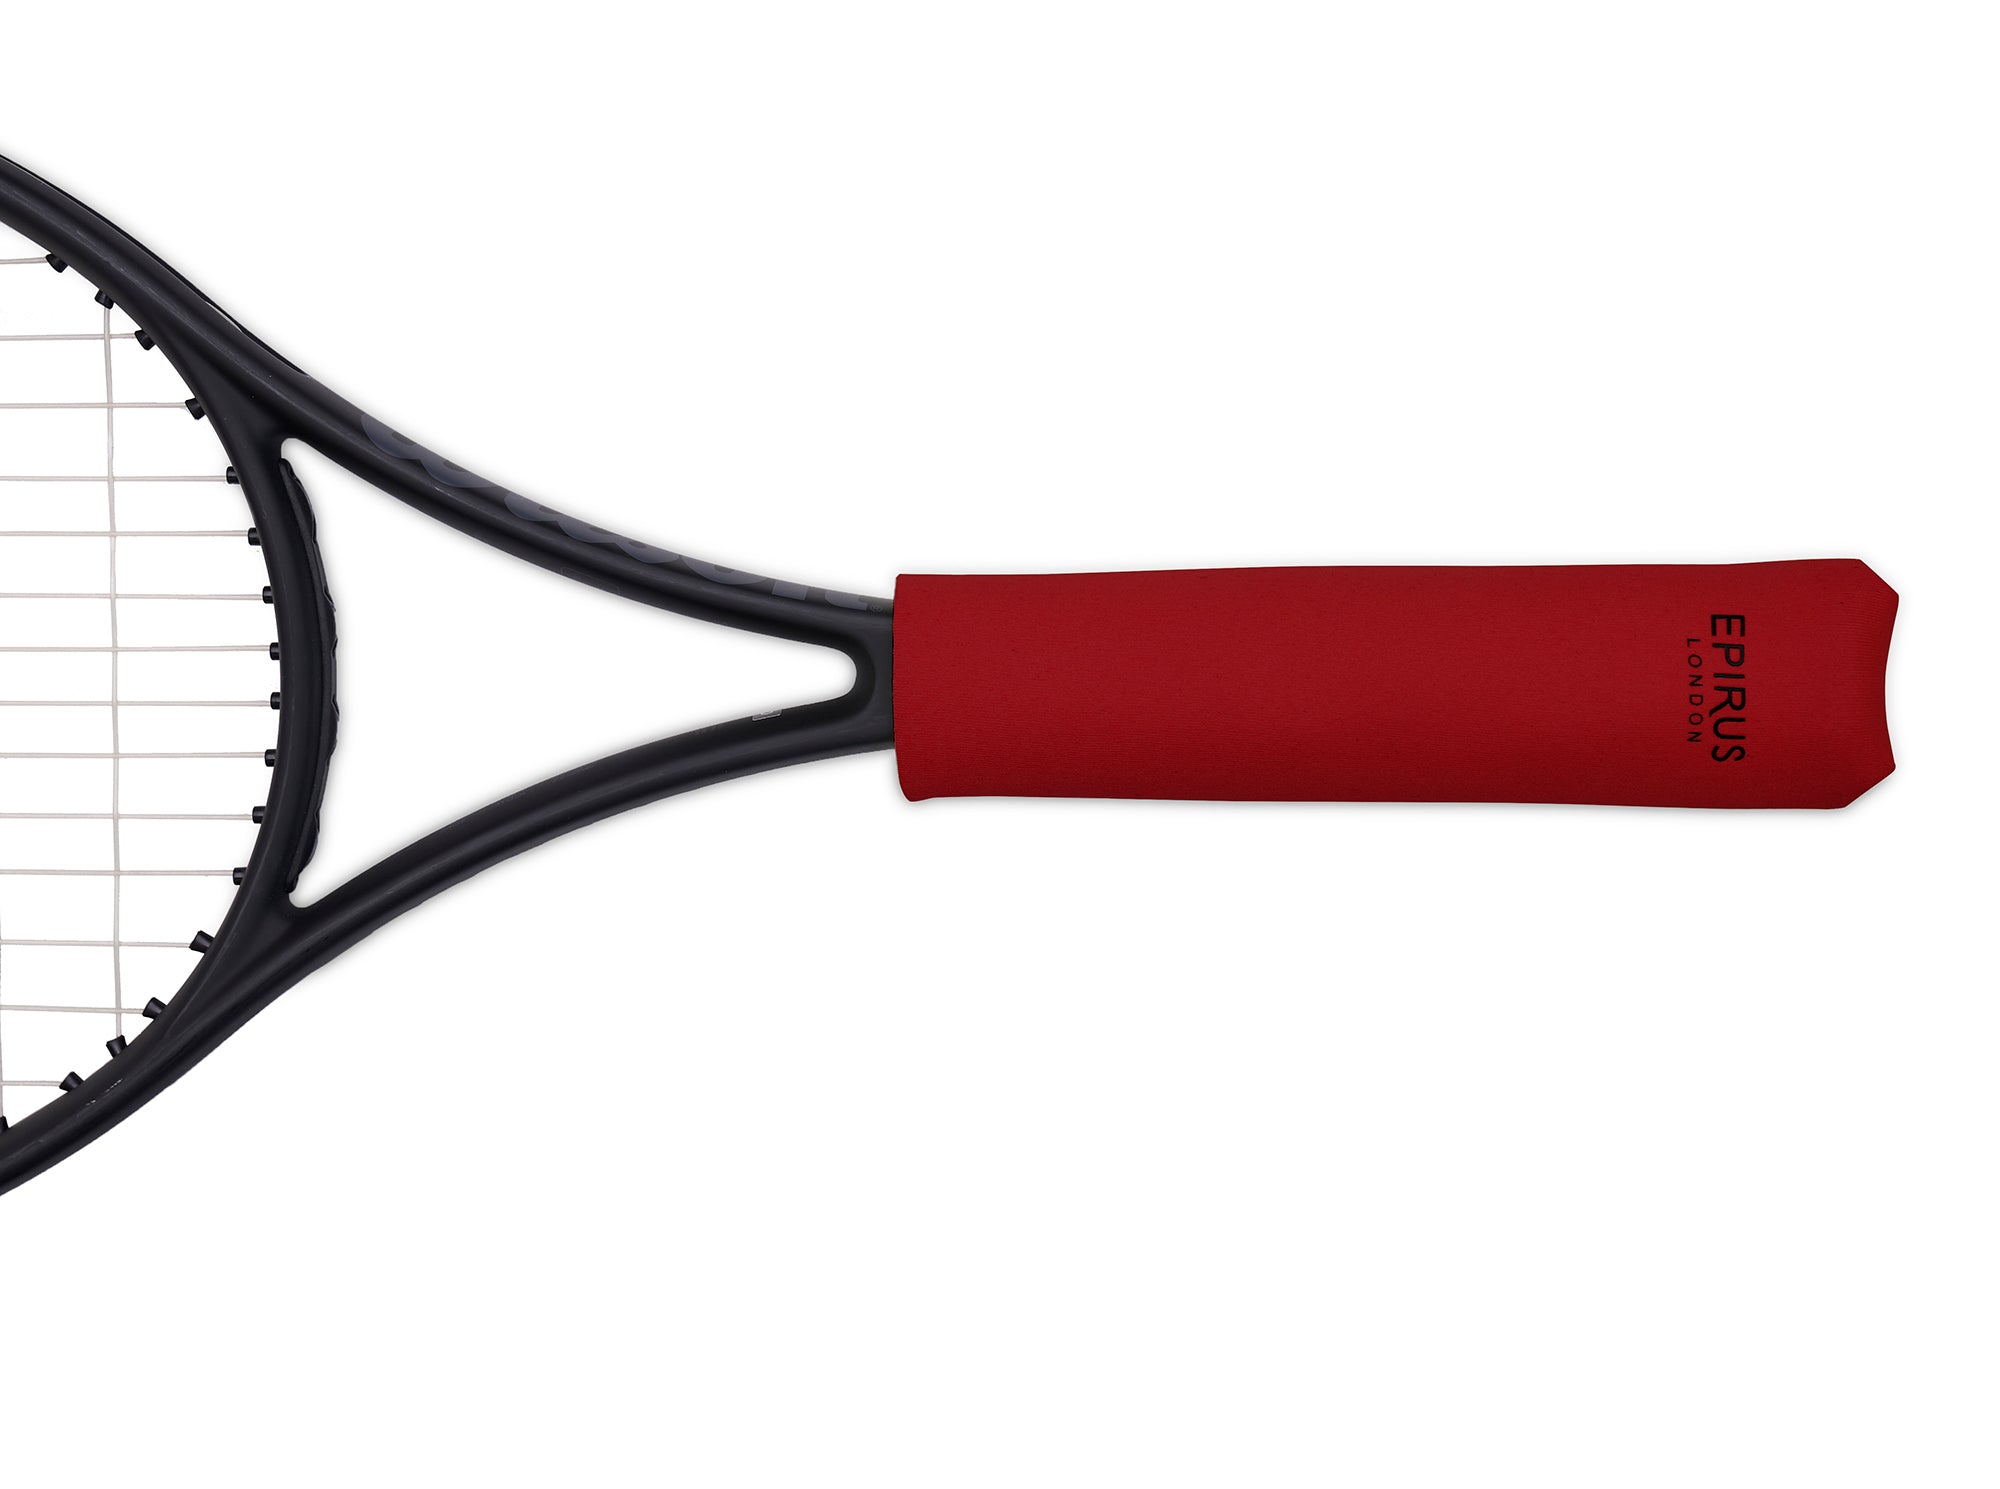 Neoprene Grip Covers  Protect Your Tennis Racket Handles - Epirus